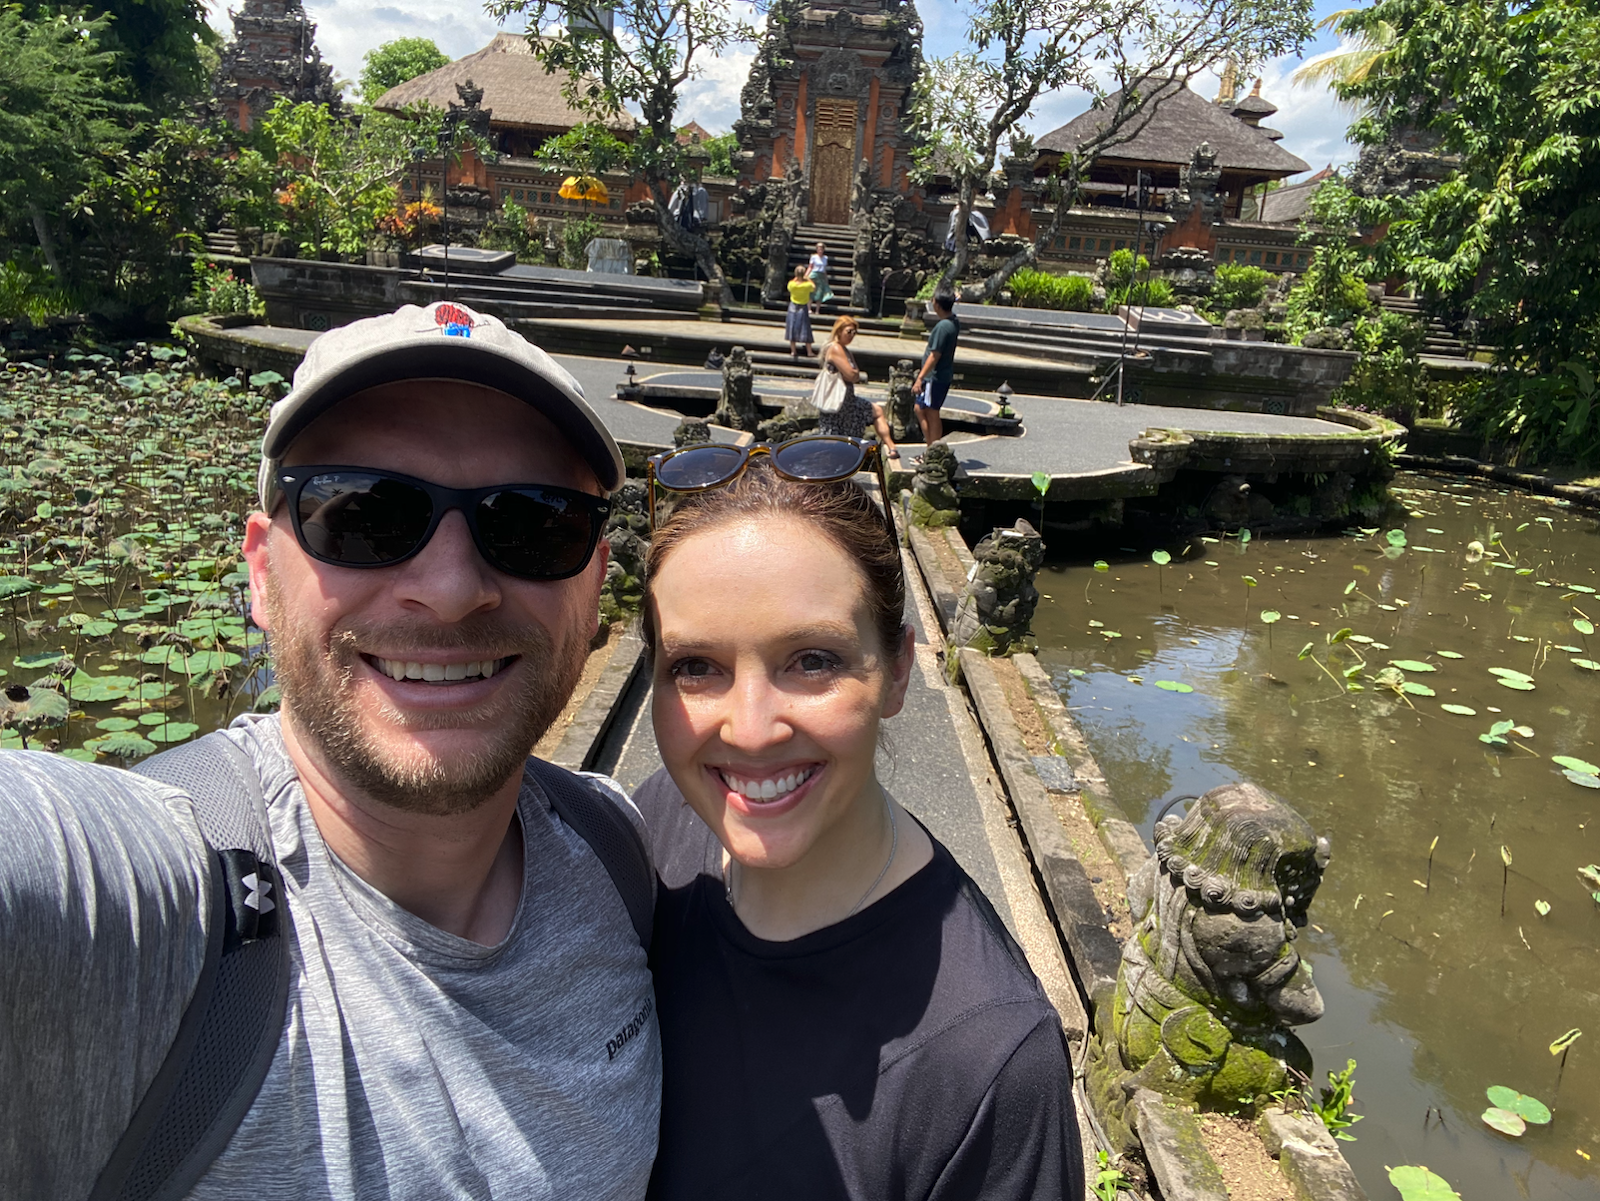 Katie and husband at an asian garden